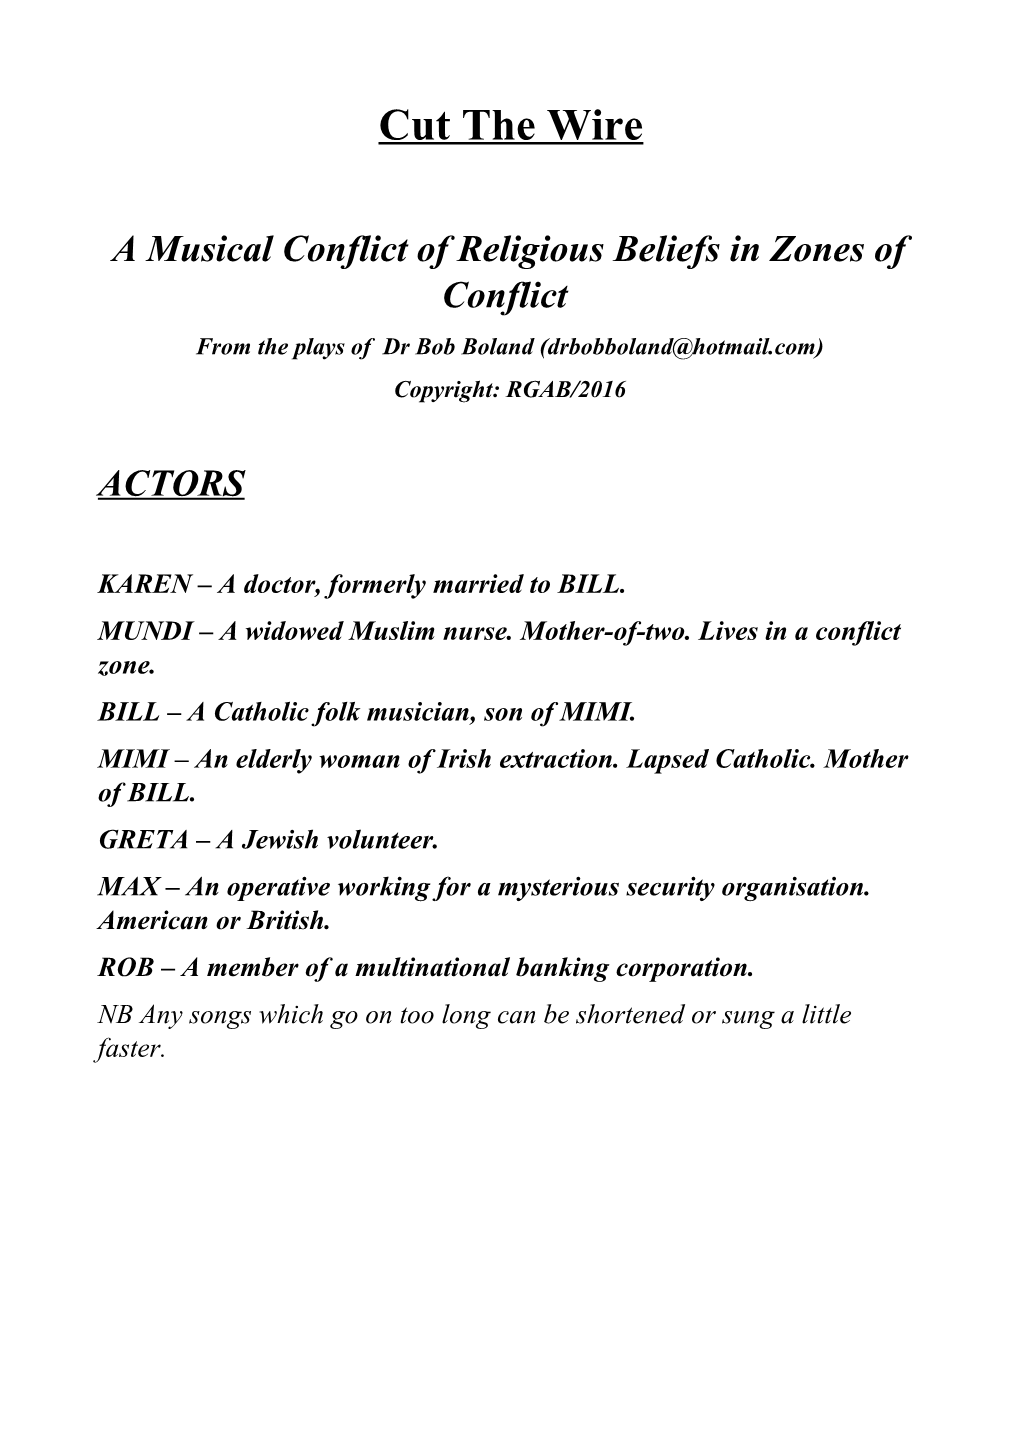 A Musical Conflict of Religious Beliefs in Zones of Conflict